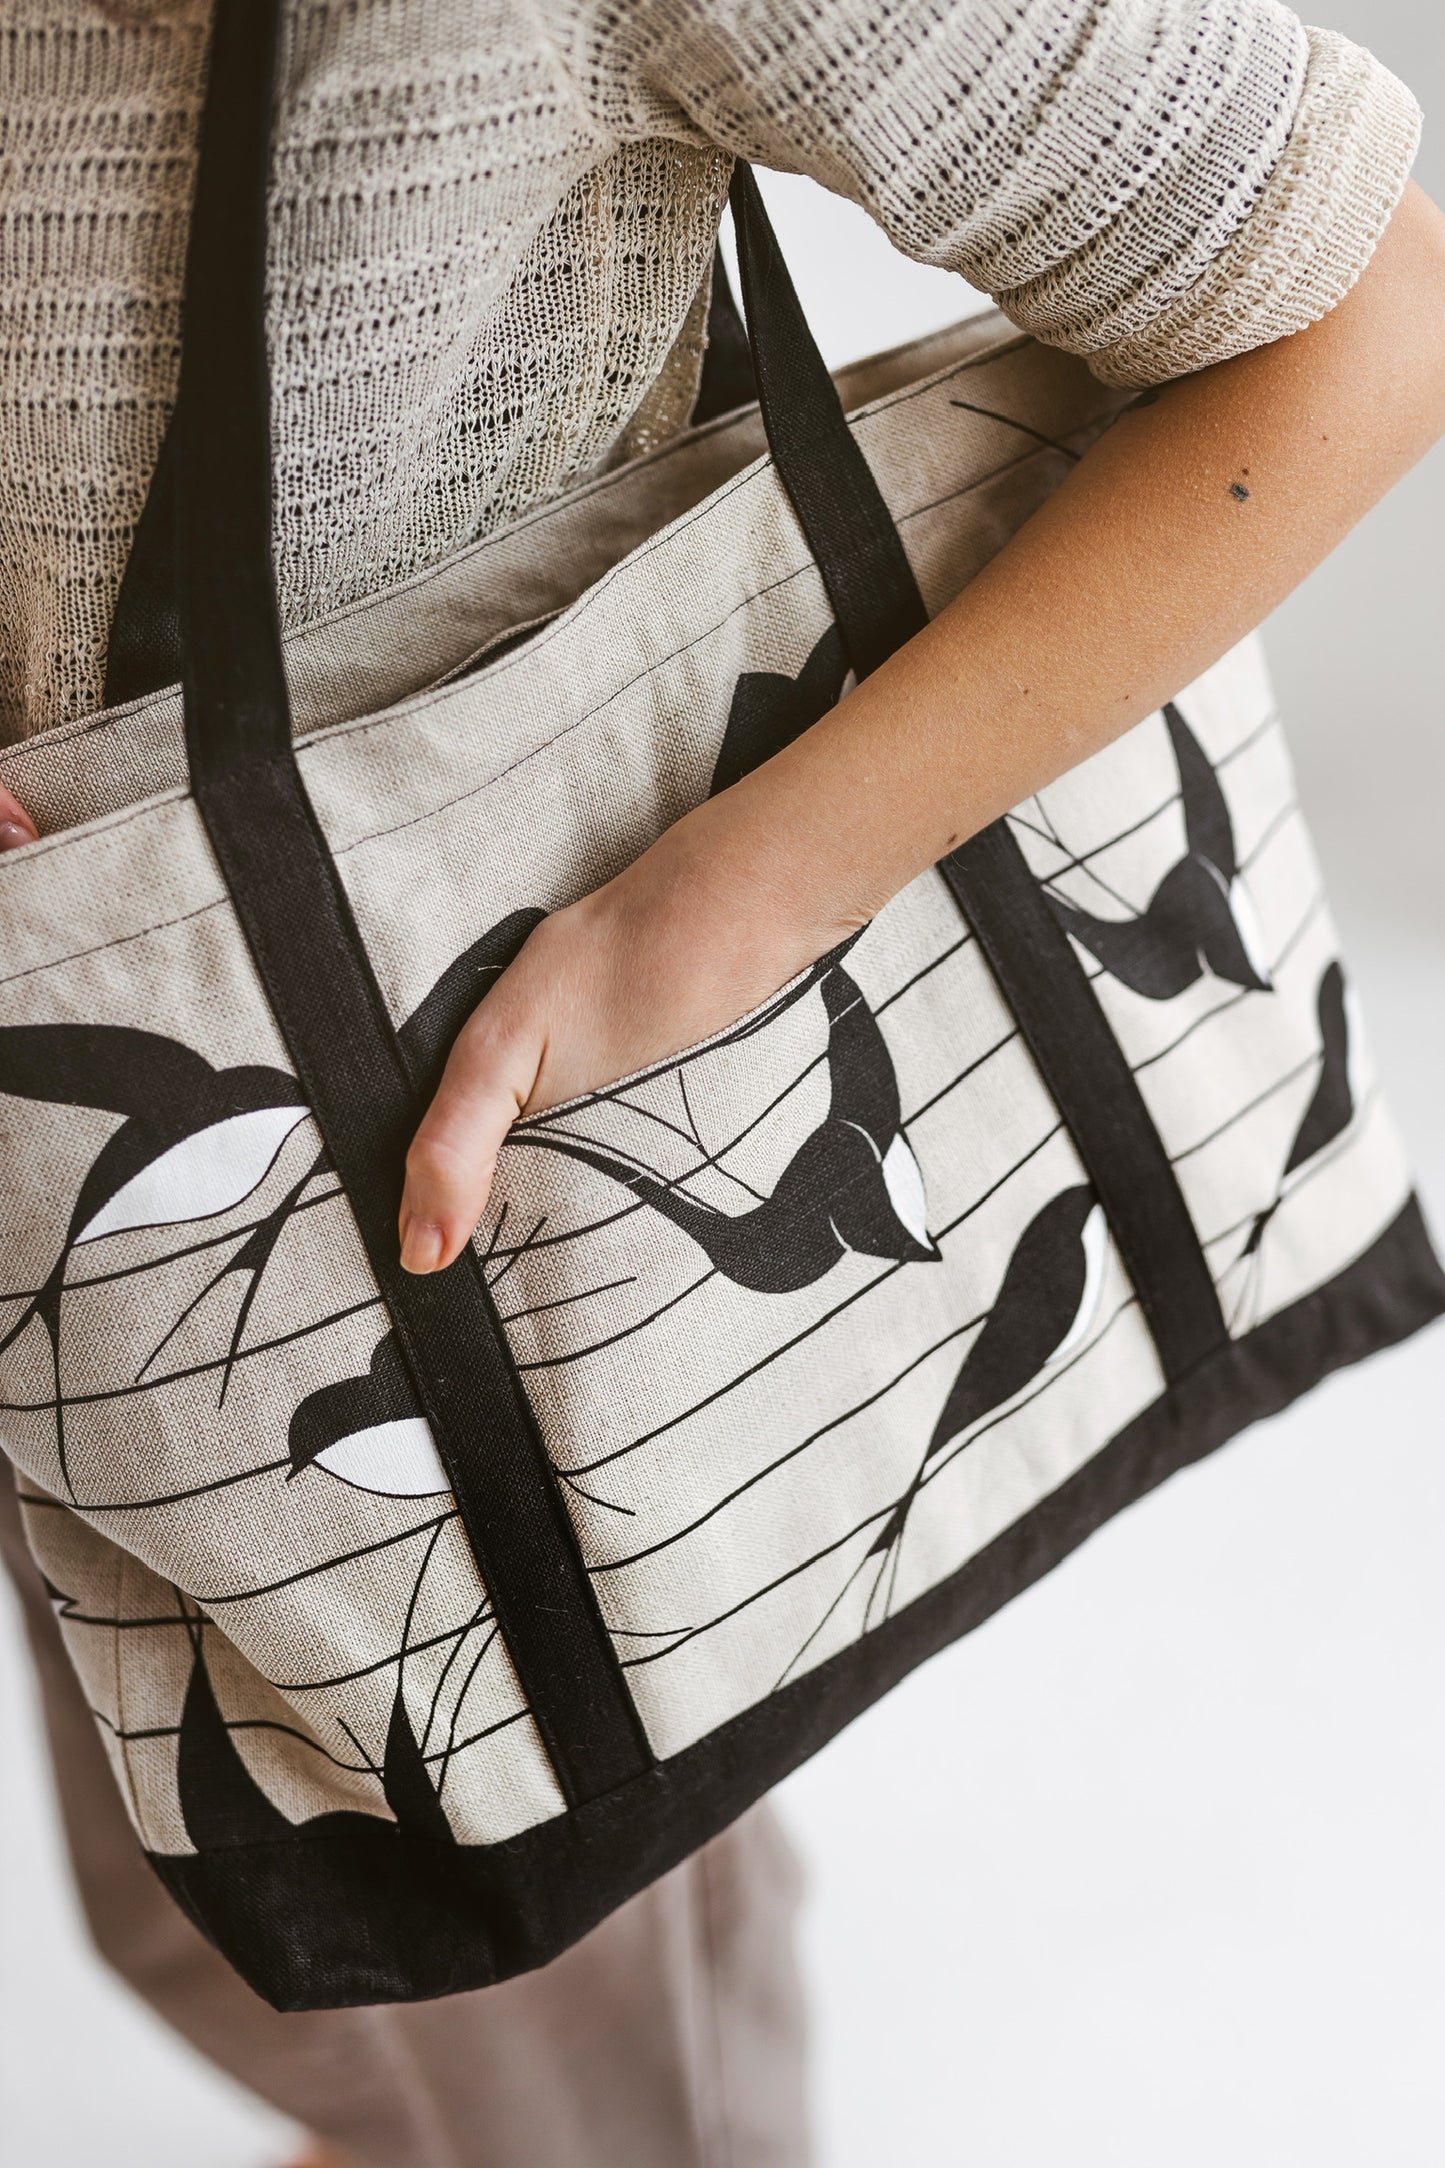 Linen Tote Bag with Swallows • Women’s Handbag with Zip • Handmade Shoulder Bag by SaVa Seasons